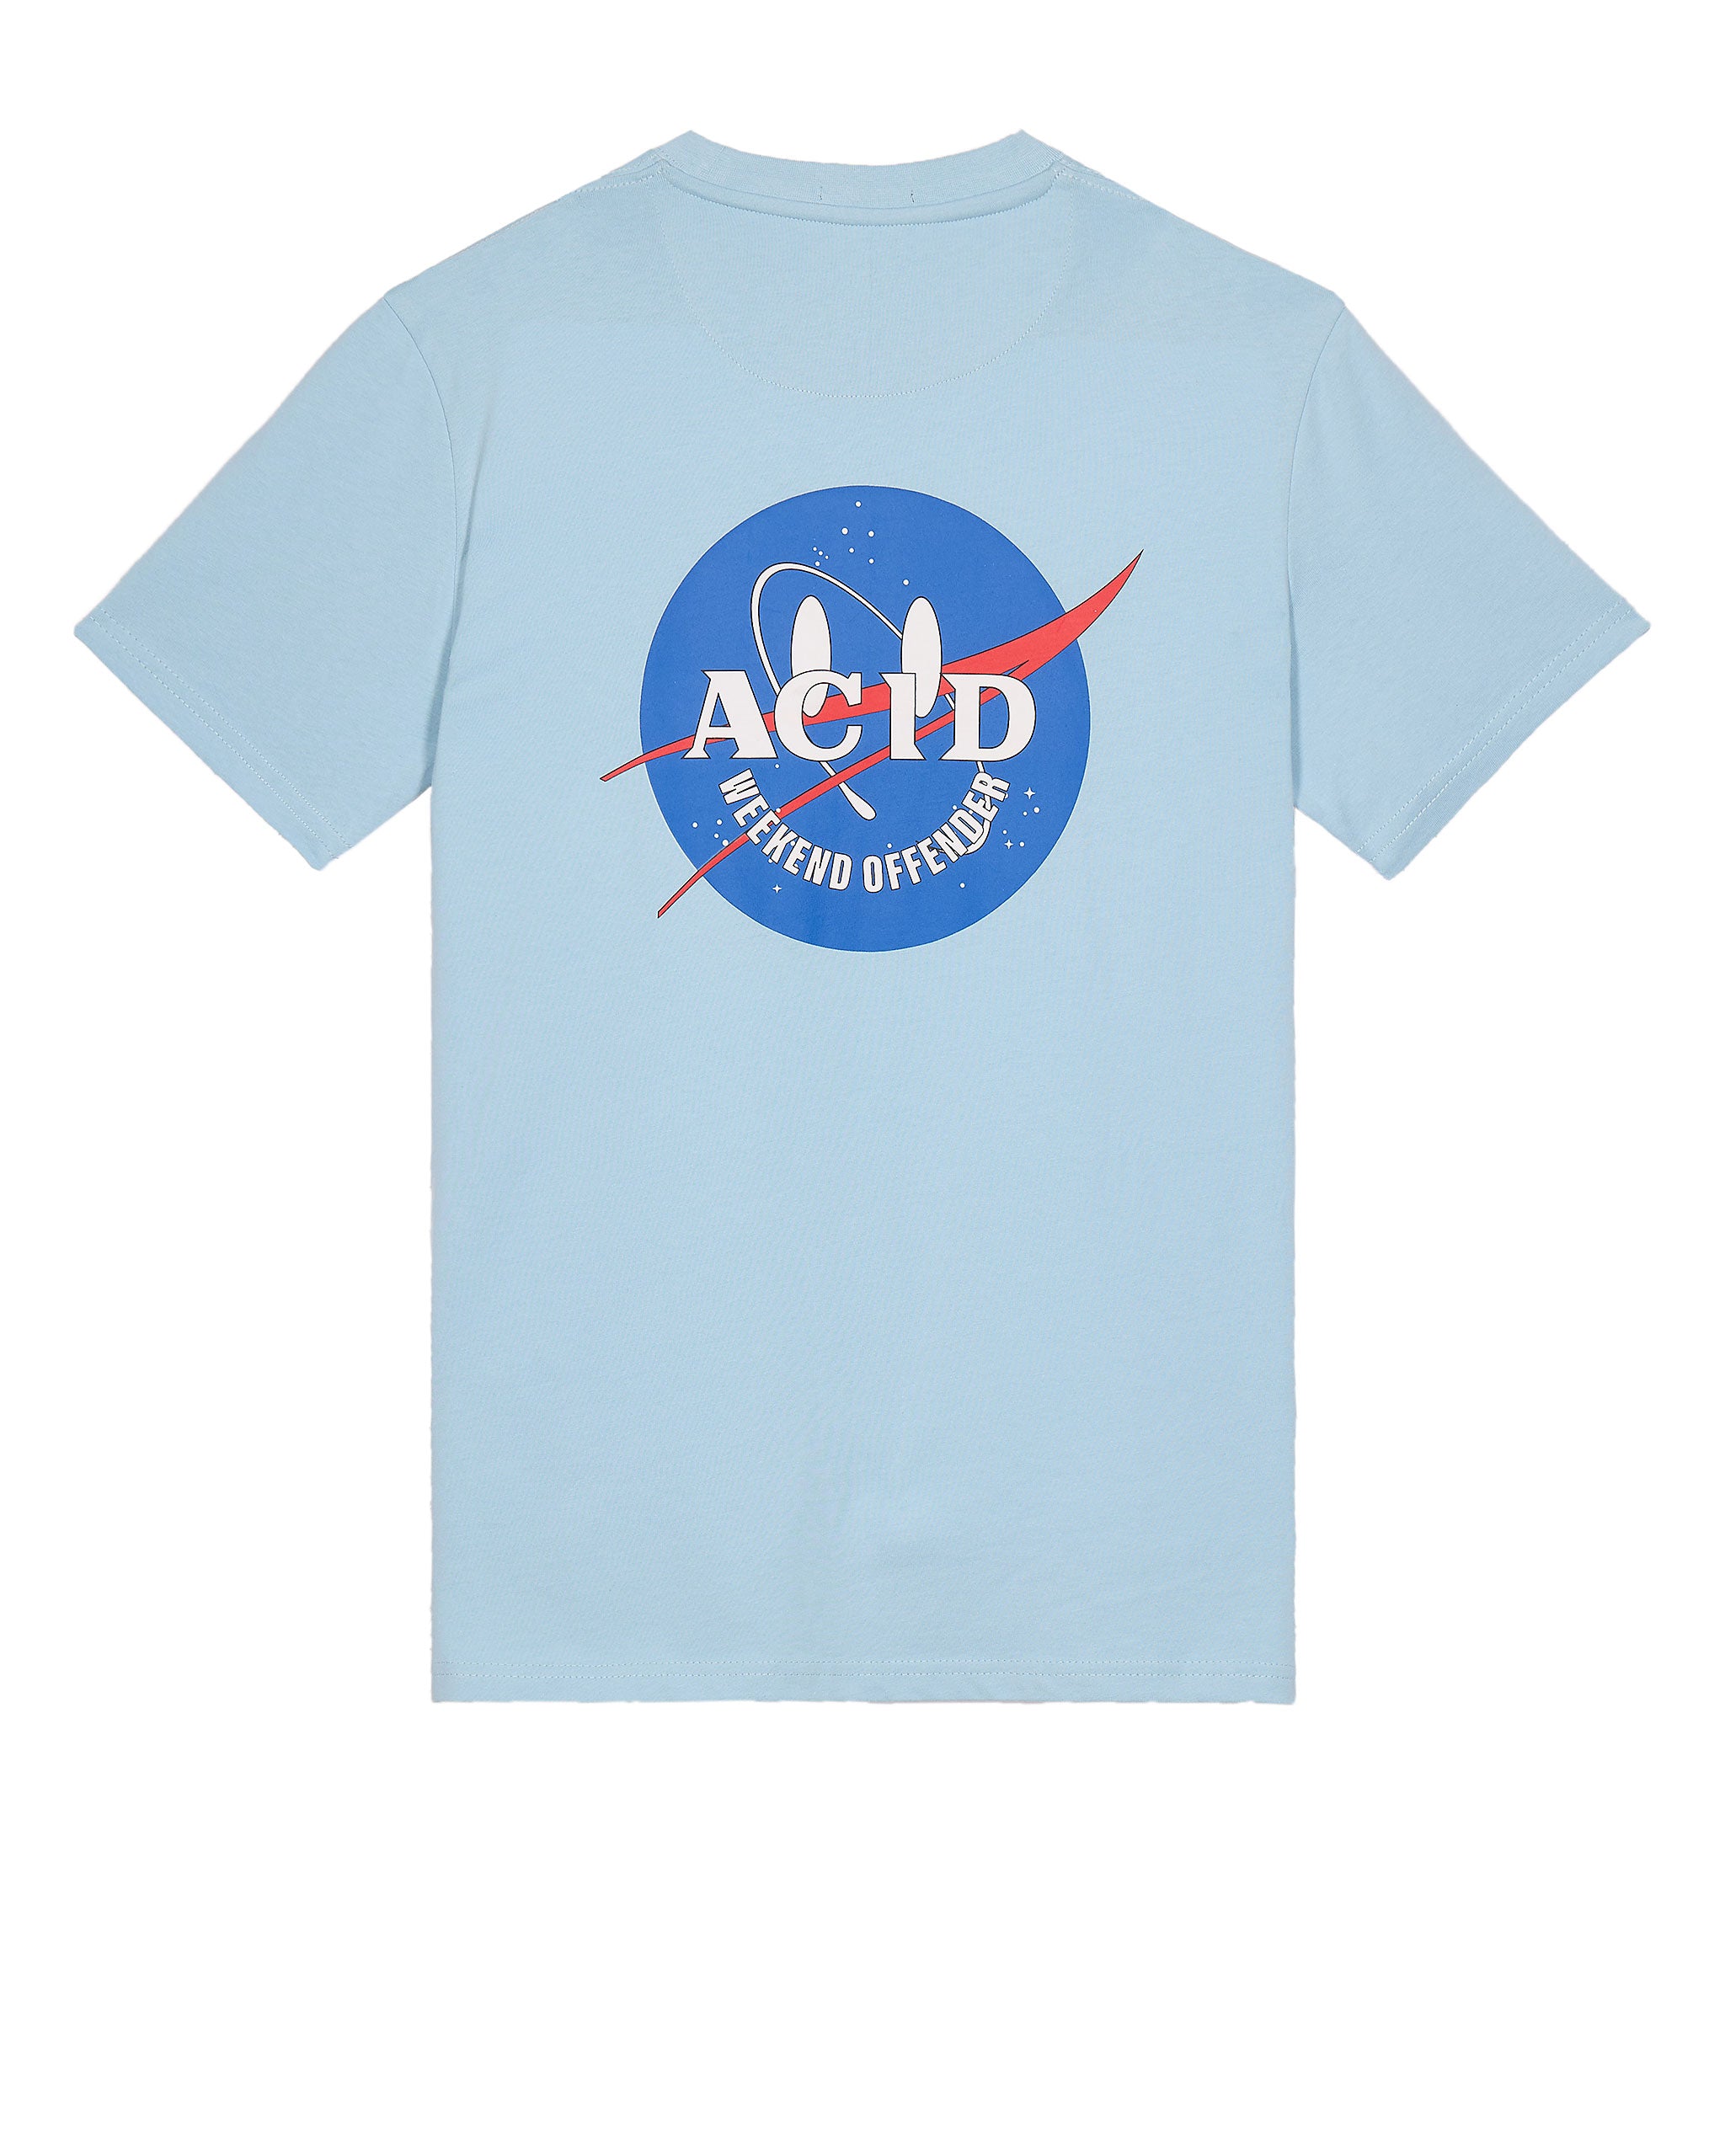 Nasa Graphic T-Shirt Arctic Blue